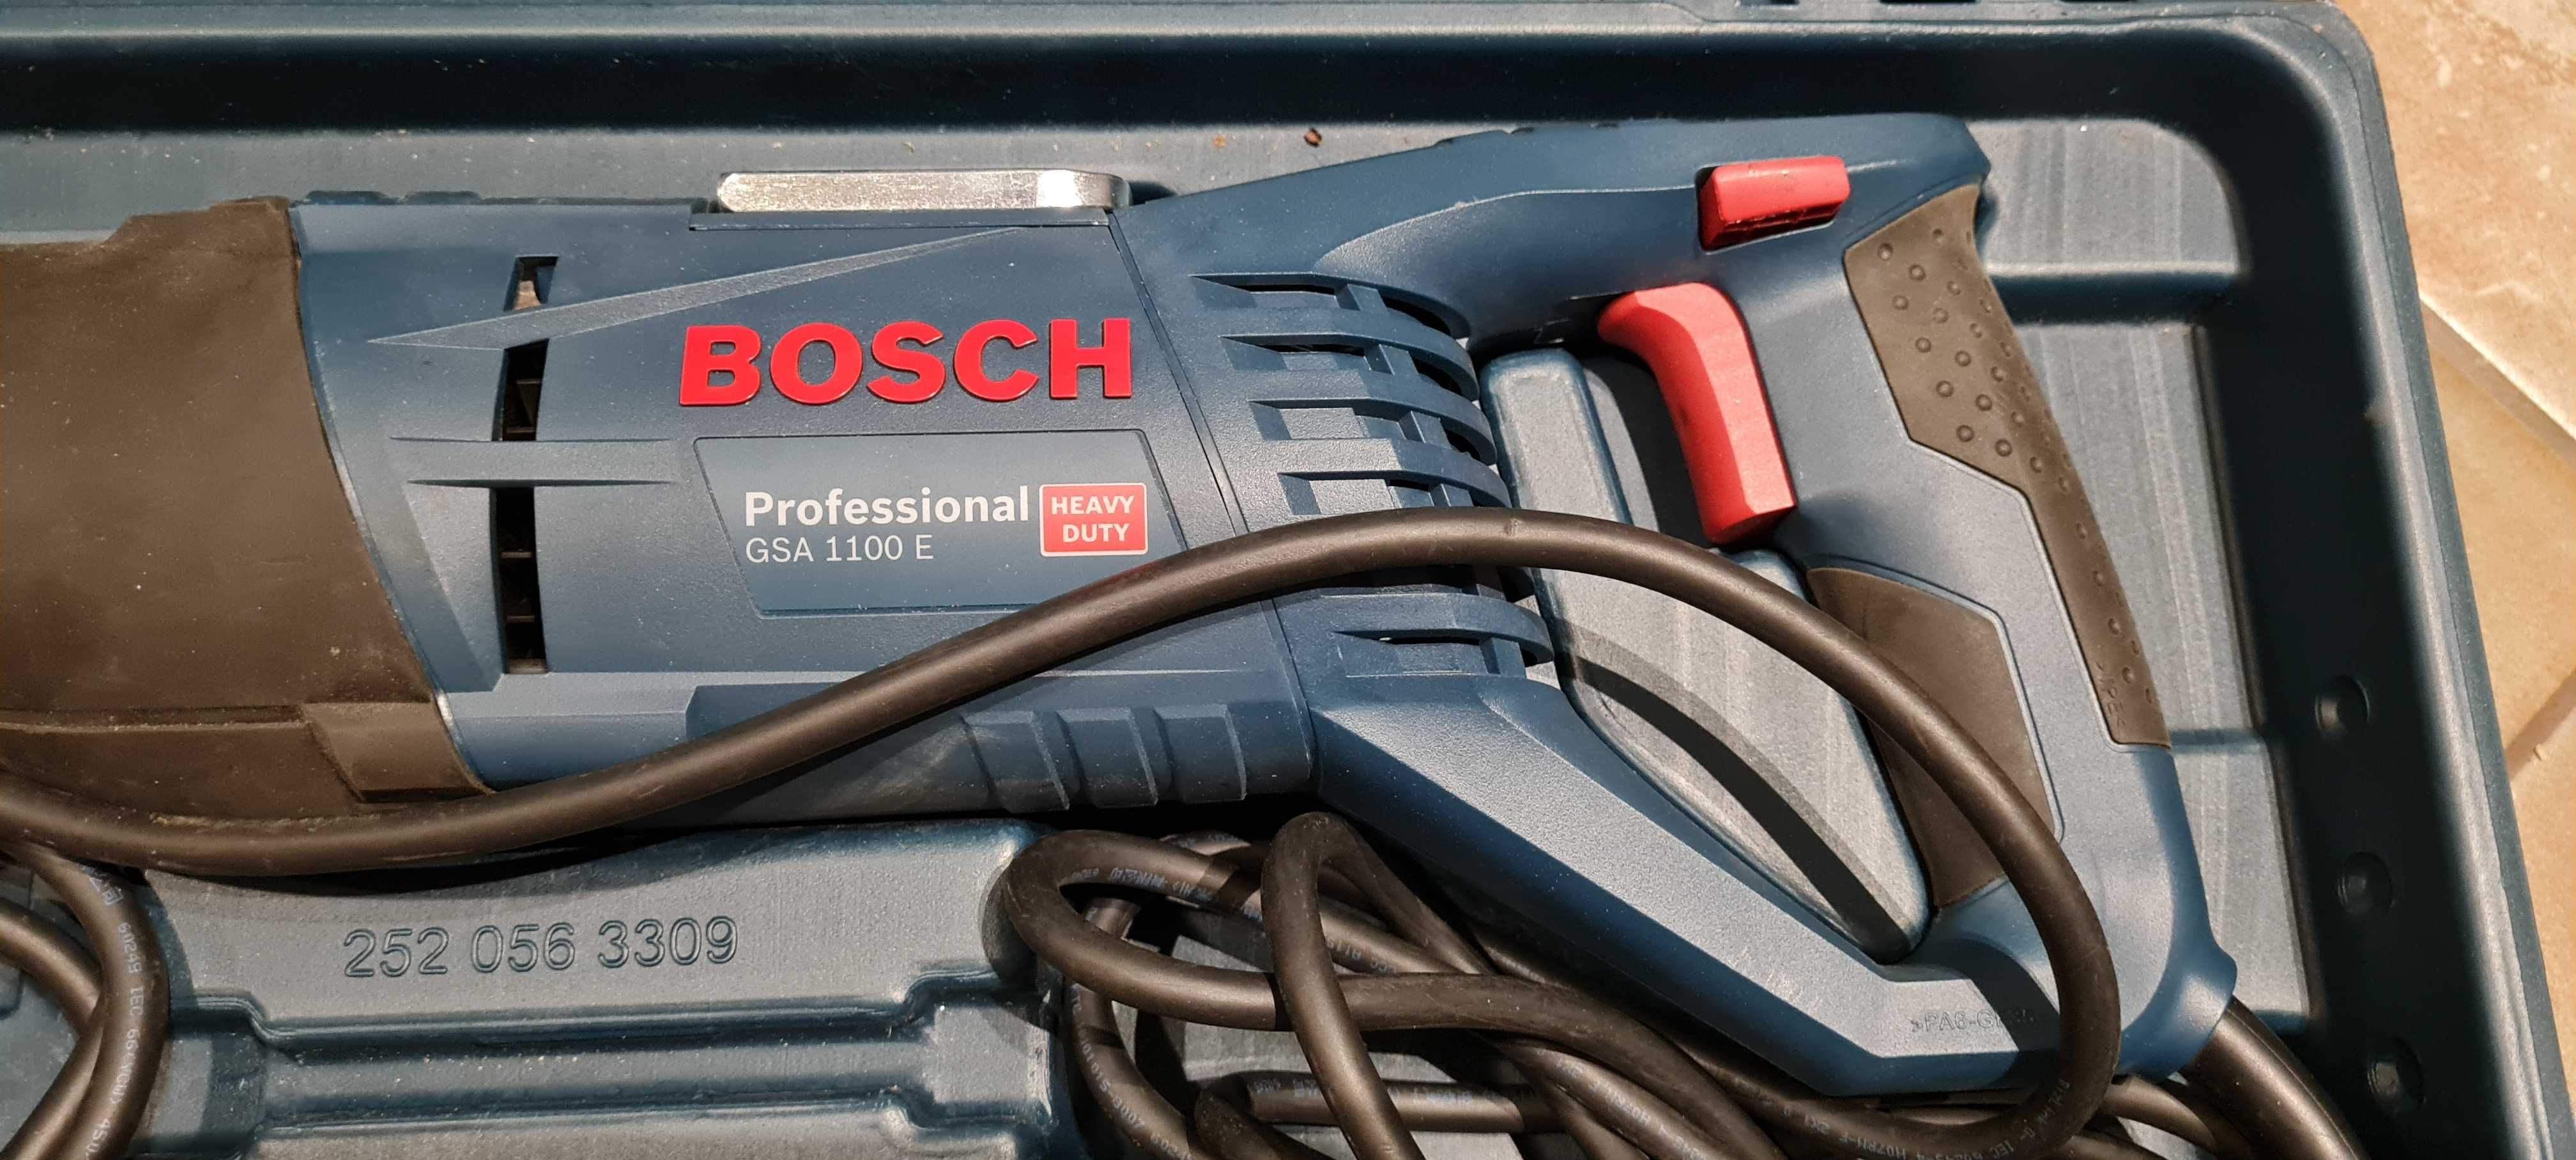 Piła Bosch GSA 1100 E Professional